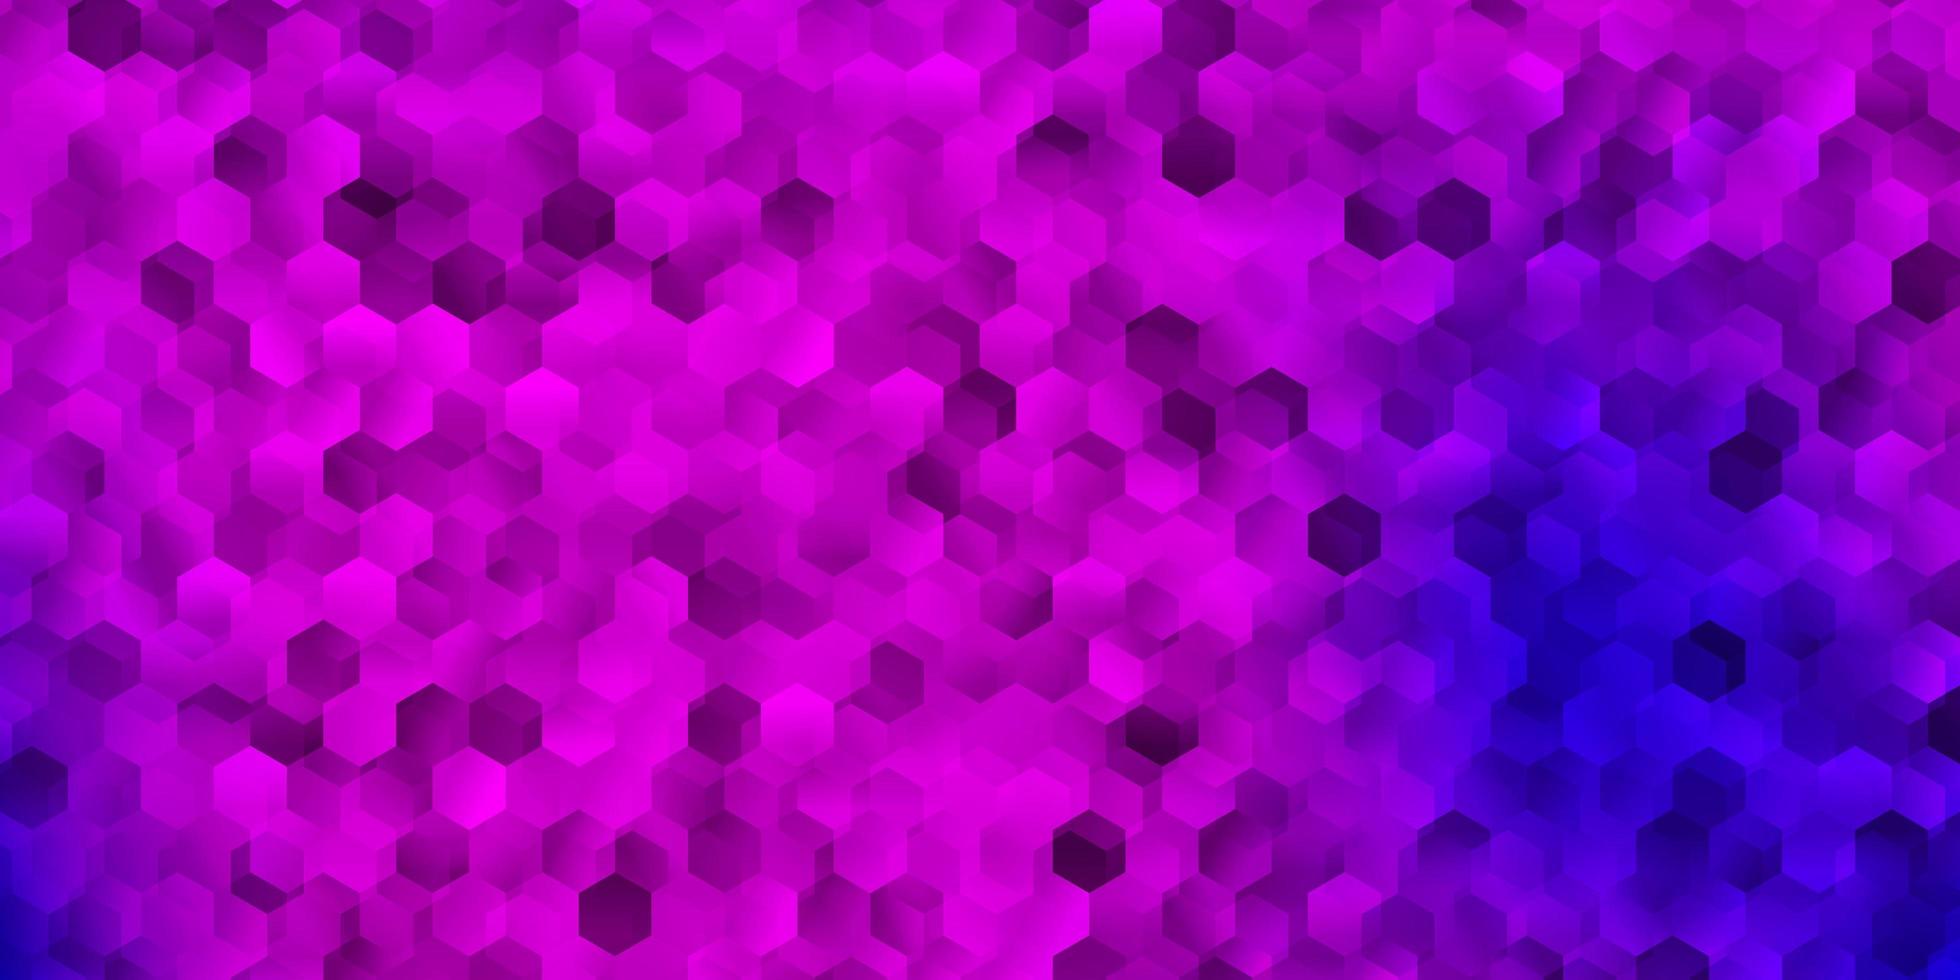 layout de vetor roxo claro, rosa com formas de hexágonos.